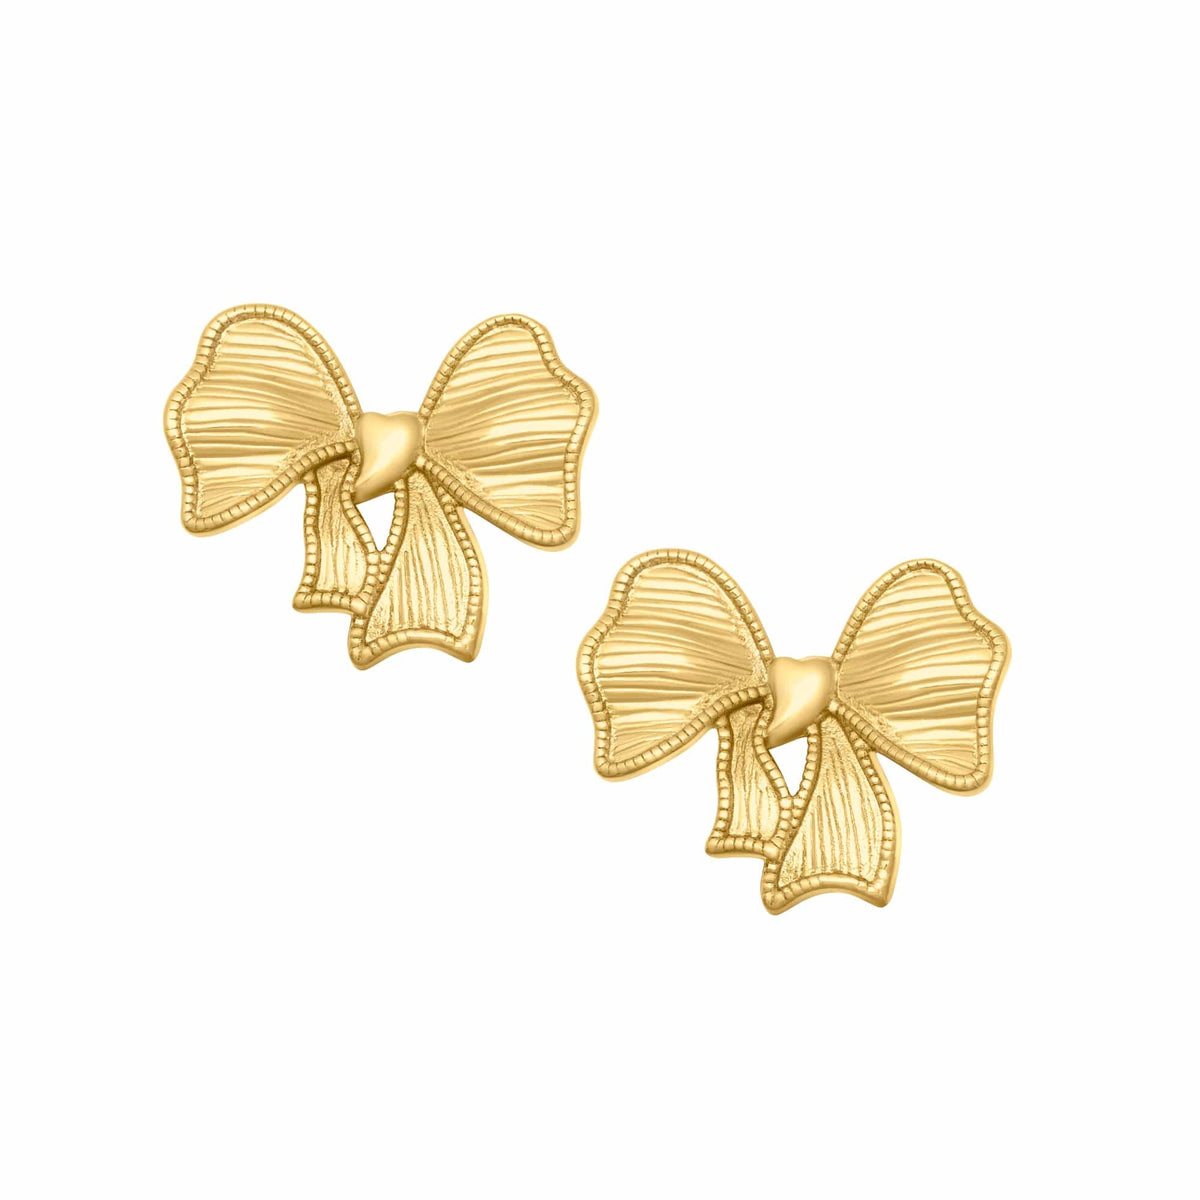 BohoMoon Stainless Steel Marci Bow Stud Earrings Gold